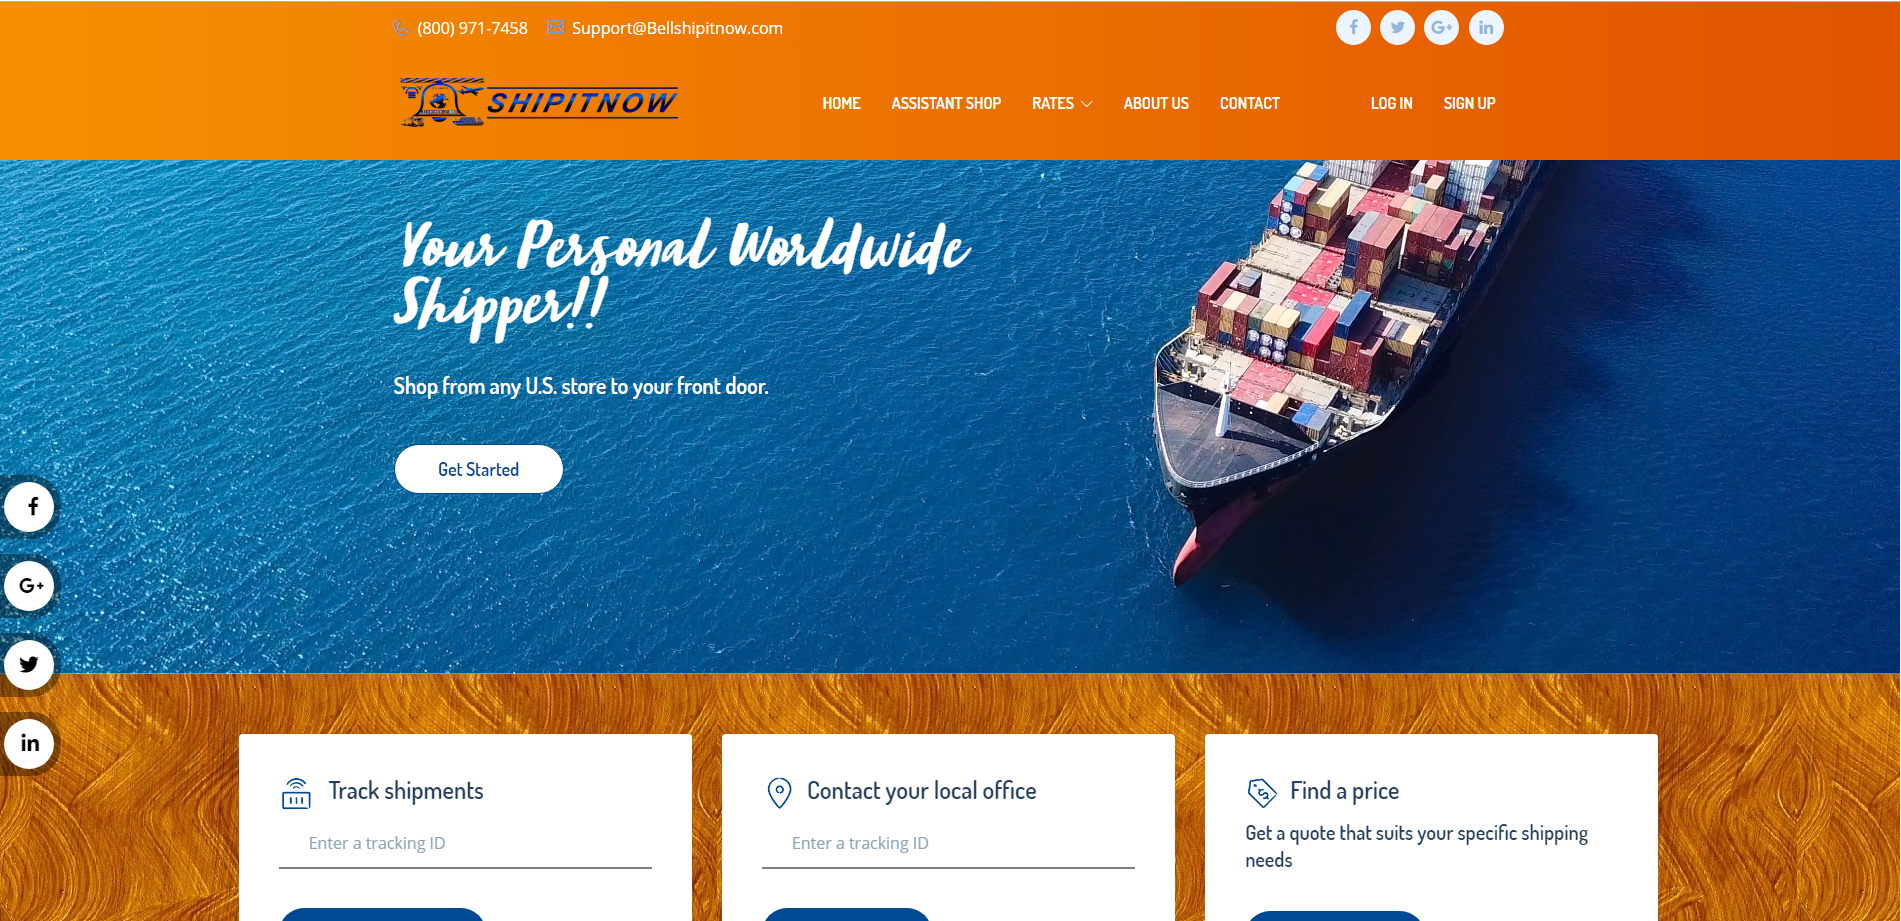 bellshipitnow Wordwide Shipping Company, development by hachiweb